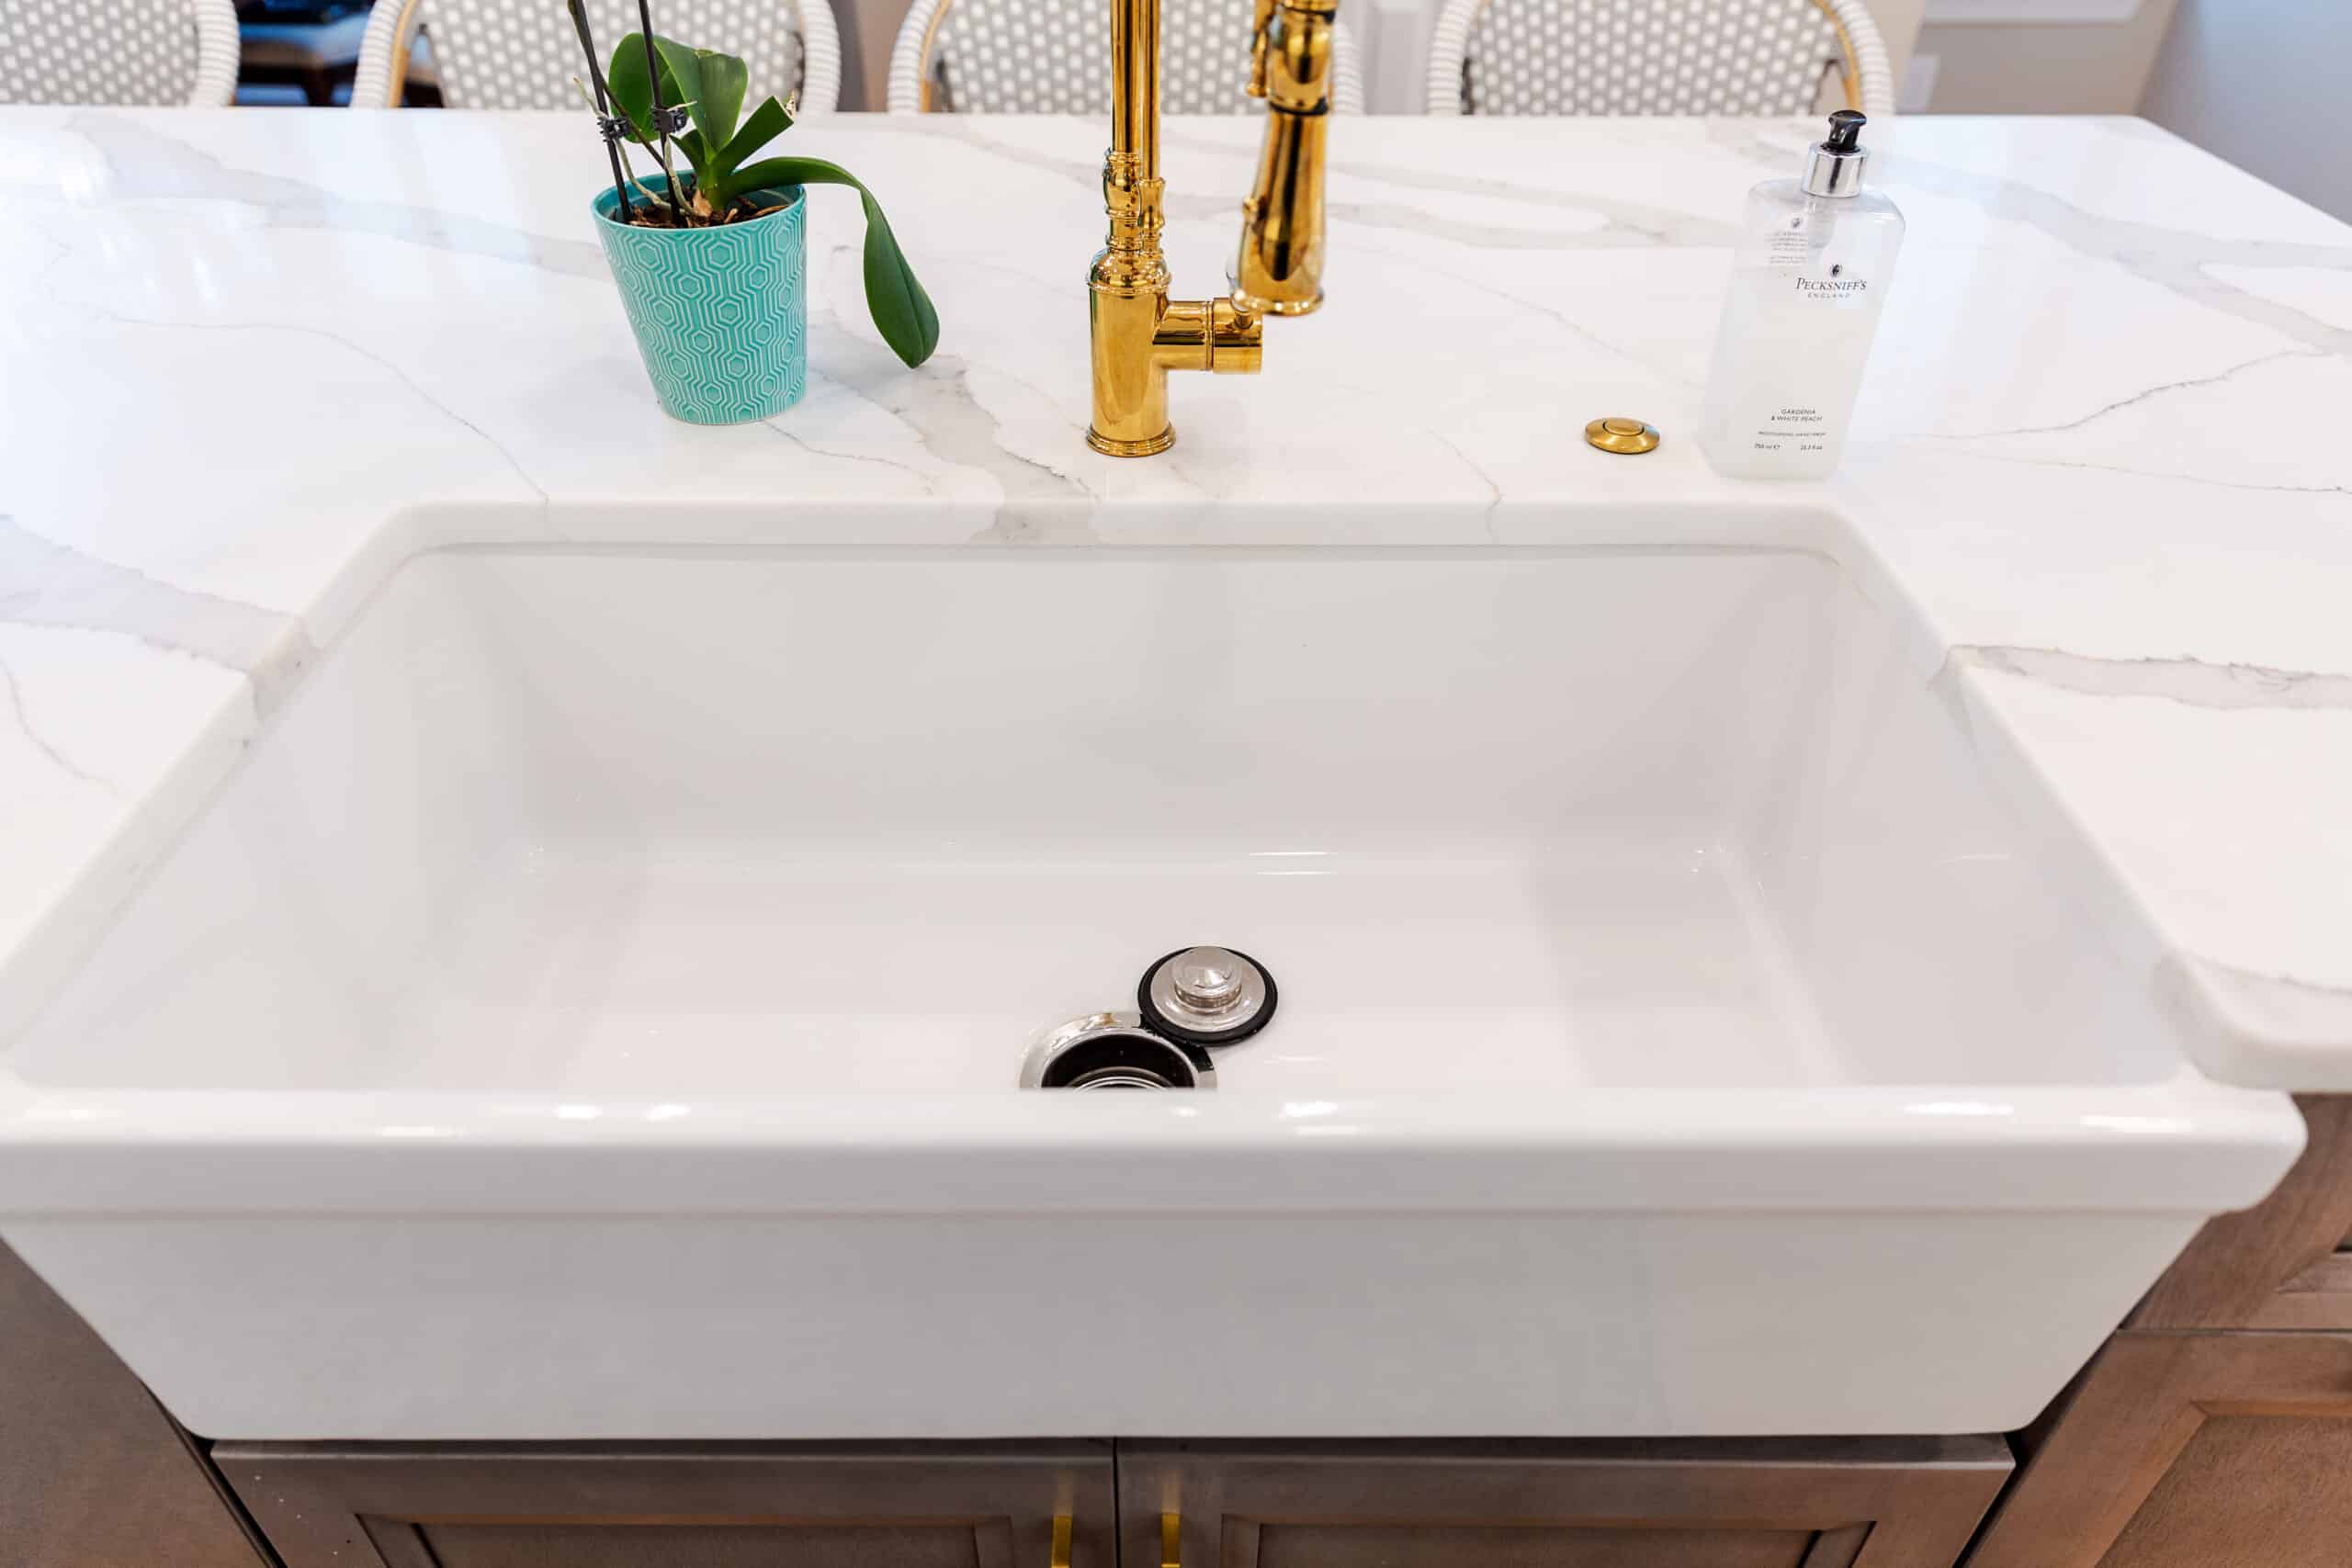 A luxurious kitchen sink featuring a gold faucet